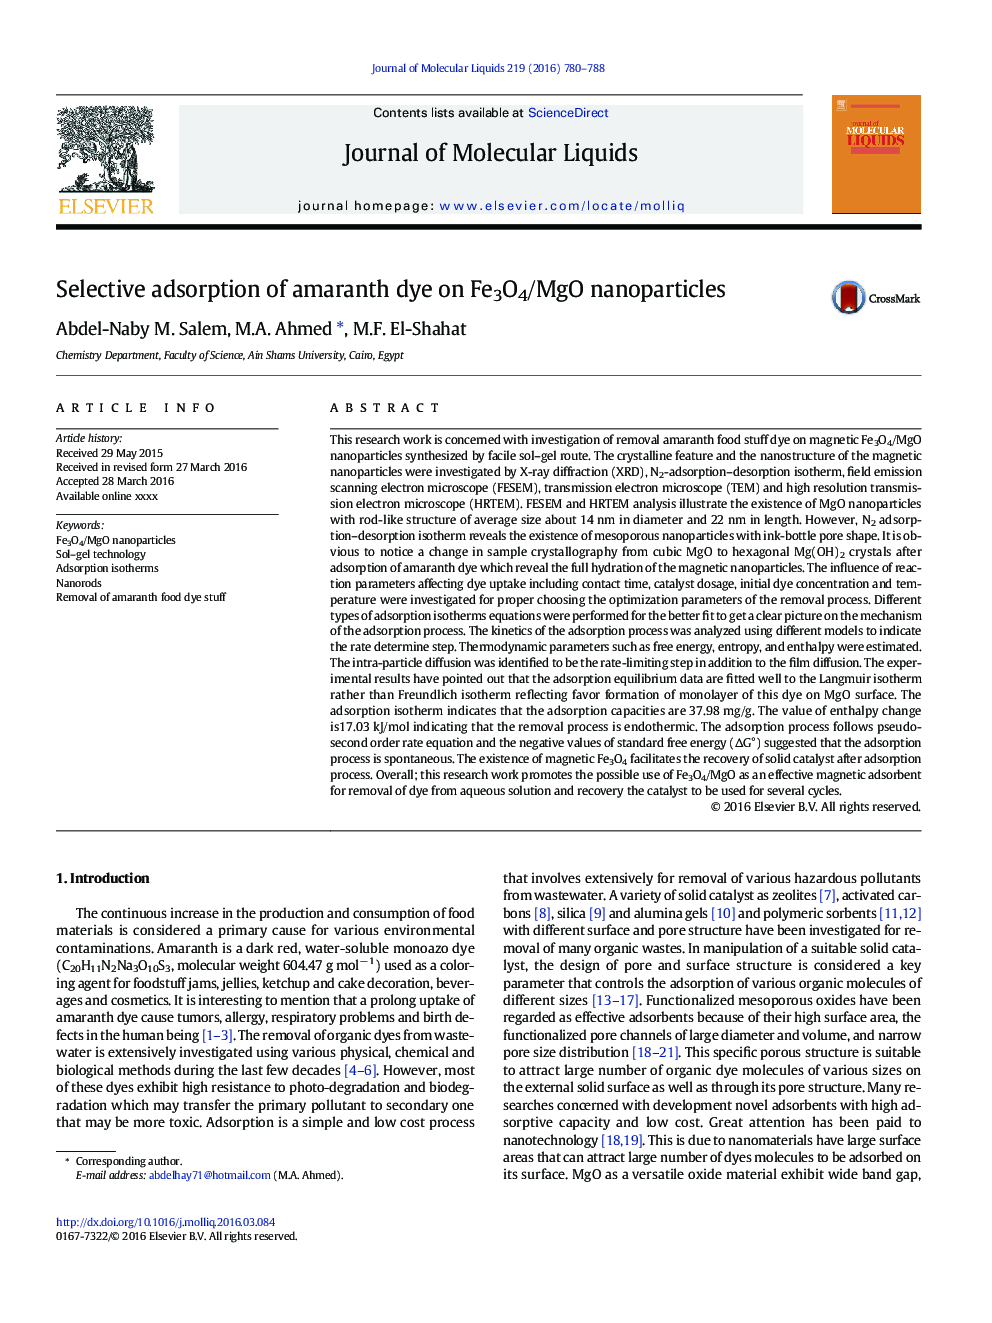 Selective adsorption of amaranth dye on Fe3O4/MgO nanoparticles